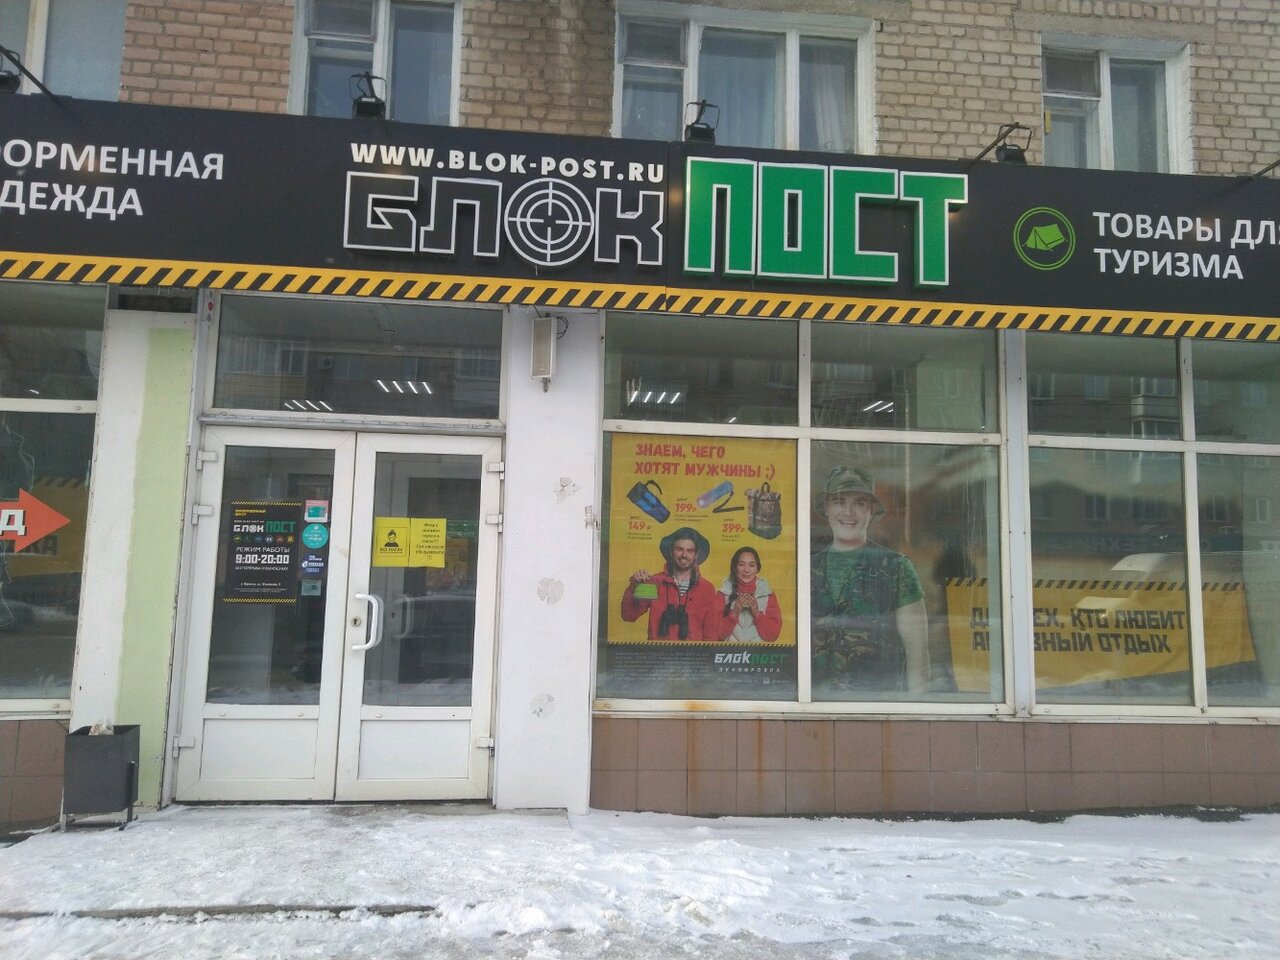 Вход в магазин снаряжения "БлокПост" на Ульянова в Брянске